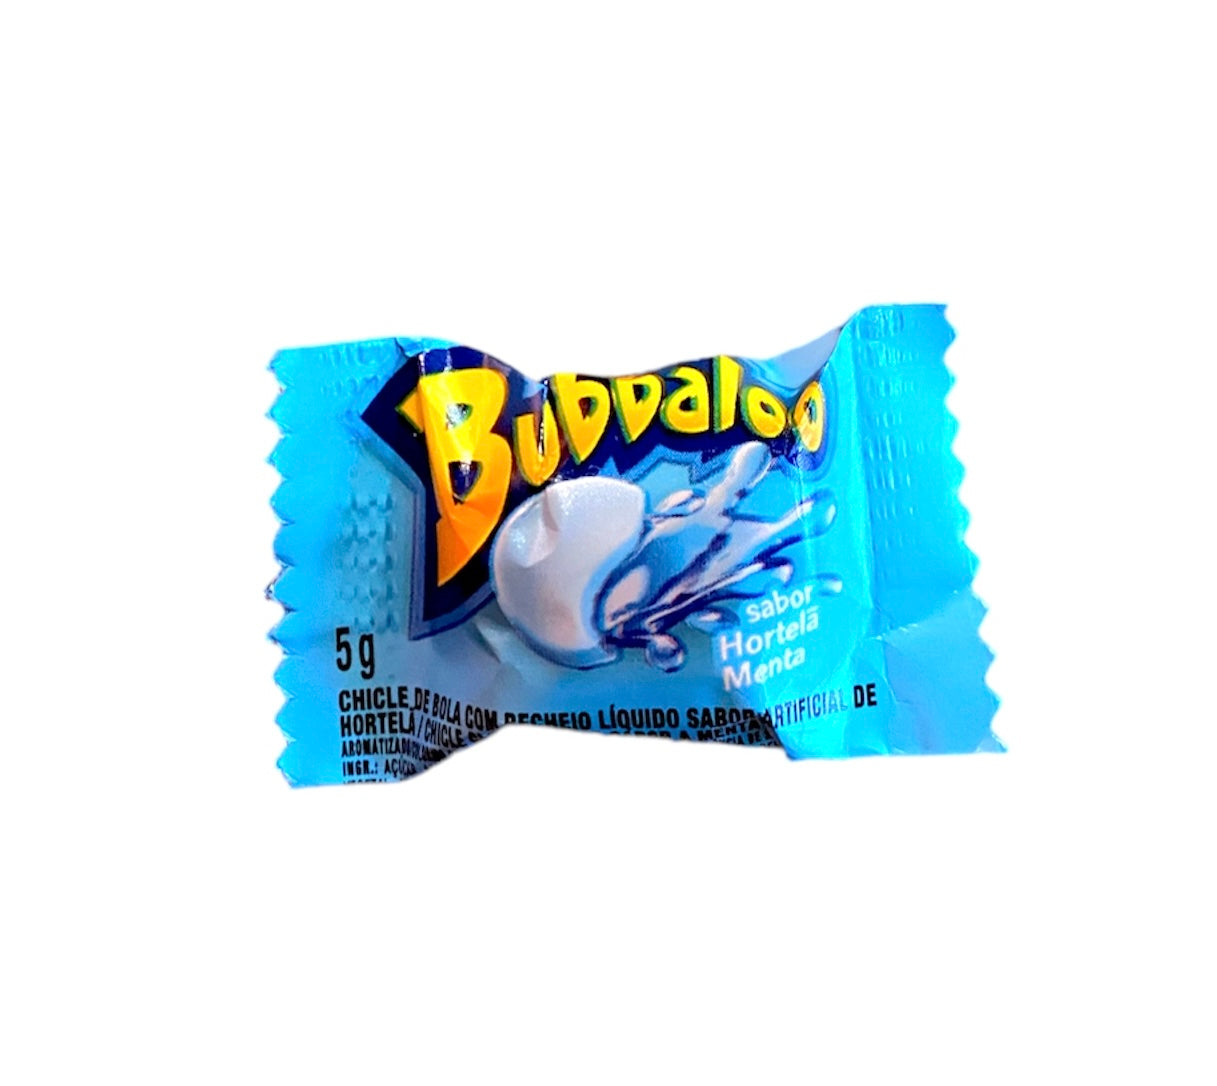 Bubbaloo Mondelez | Bubble gum